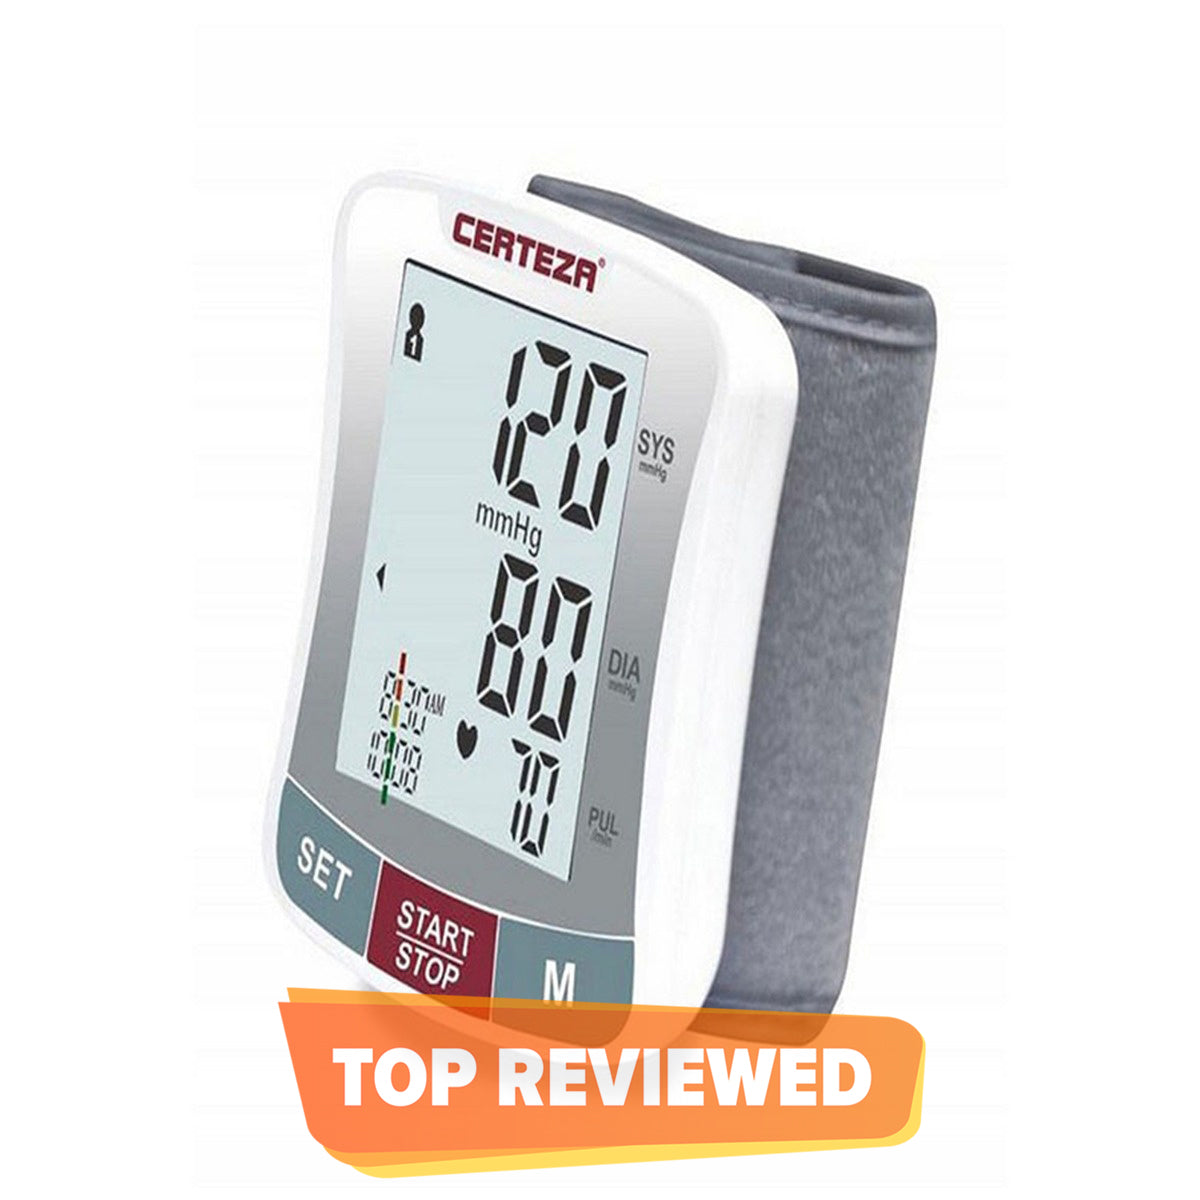 Certeza BM 307 - Wrist Type - Digital Blood Pressure Monitor - Wrist Type - BP Apparatus - BP Machine (White & Grey)